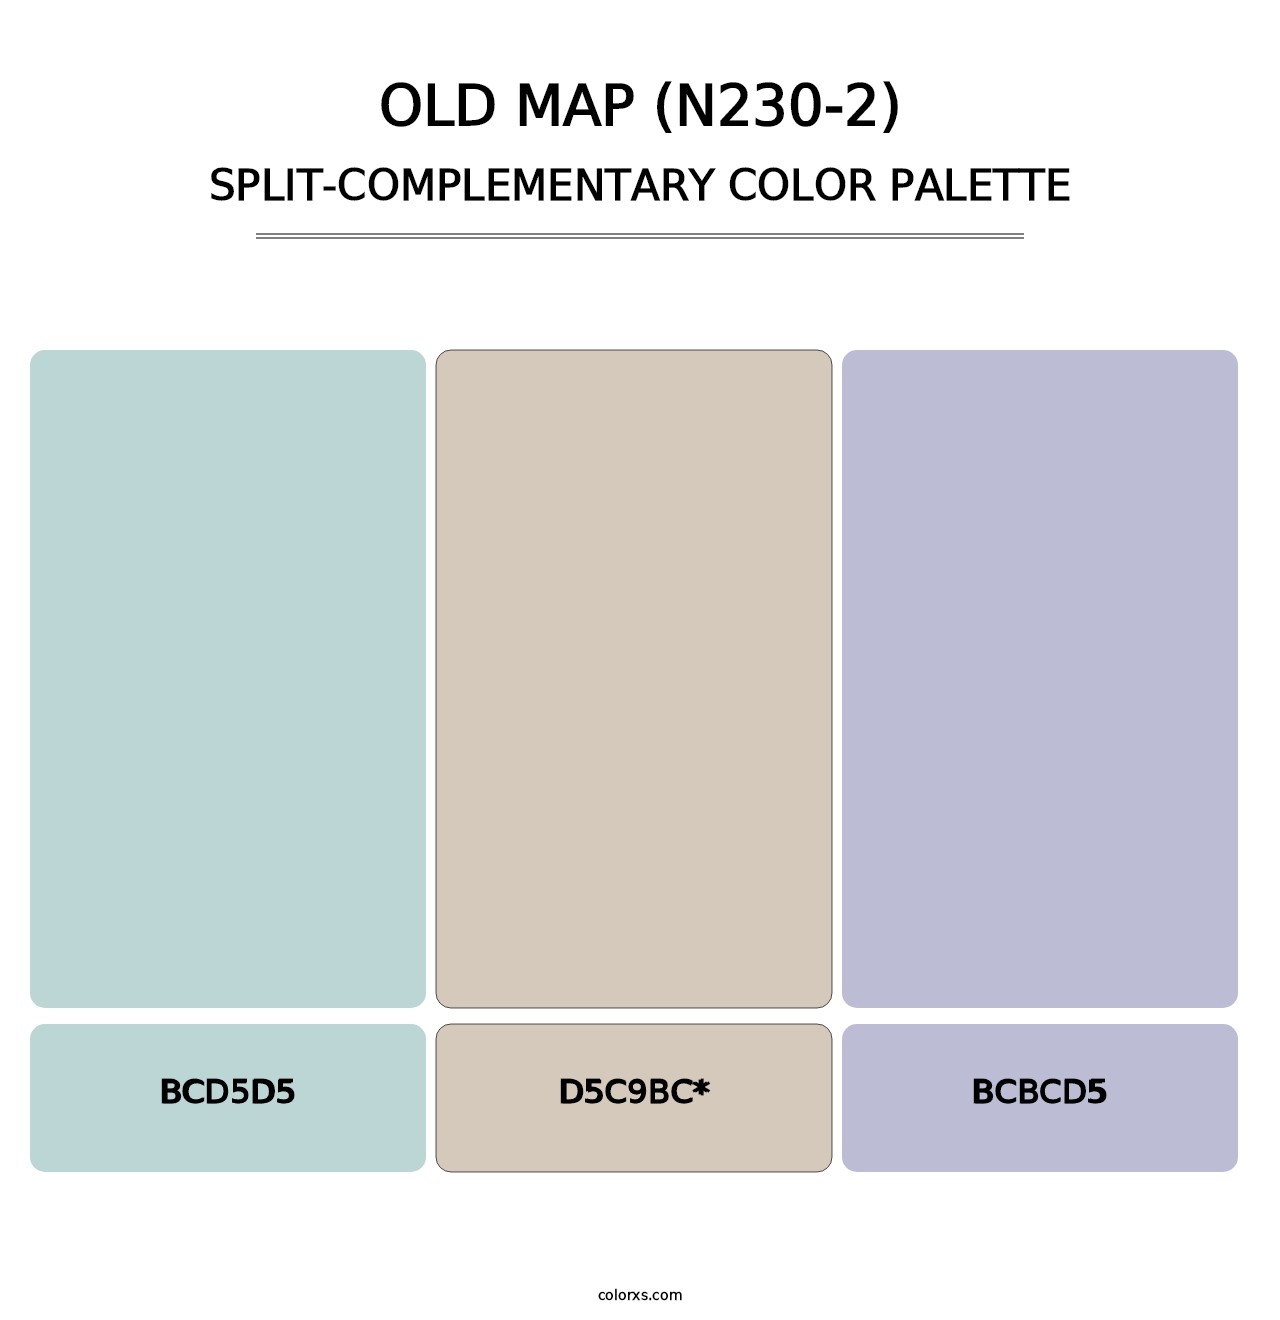 Old Map (N230-2) - Split-Complementary Color Palette